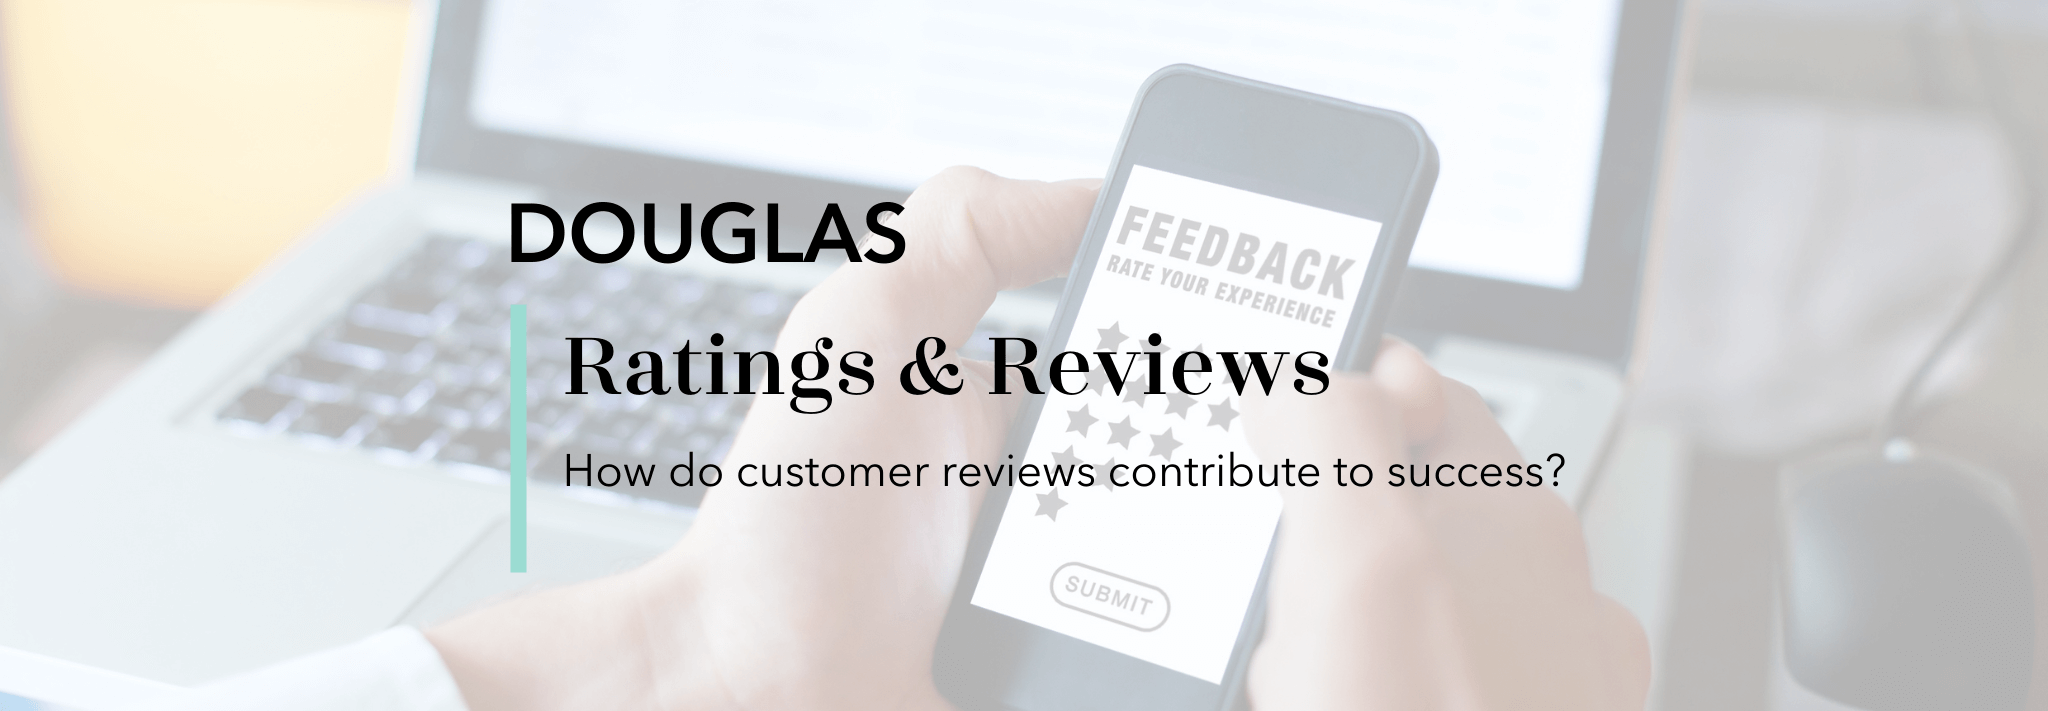 Titelbild mit Schriftzug - Douglas Ratings and Reviews